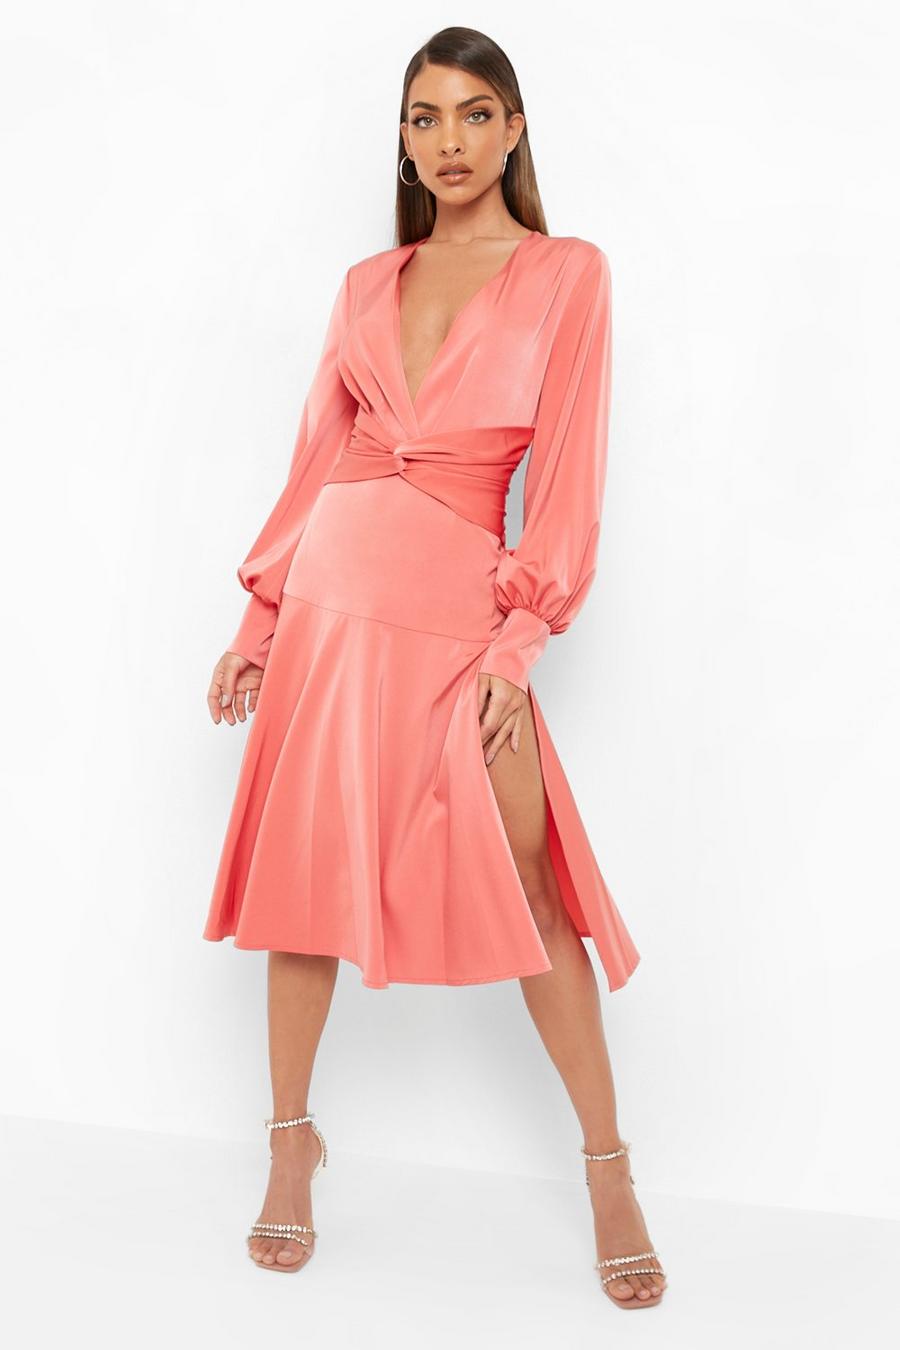 Coral pink Satin Twist Front Midi Bridesmaid Dress